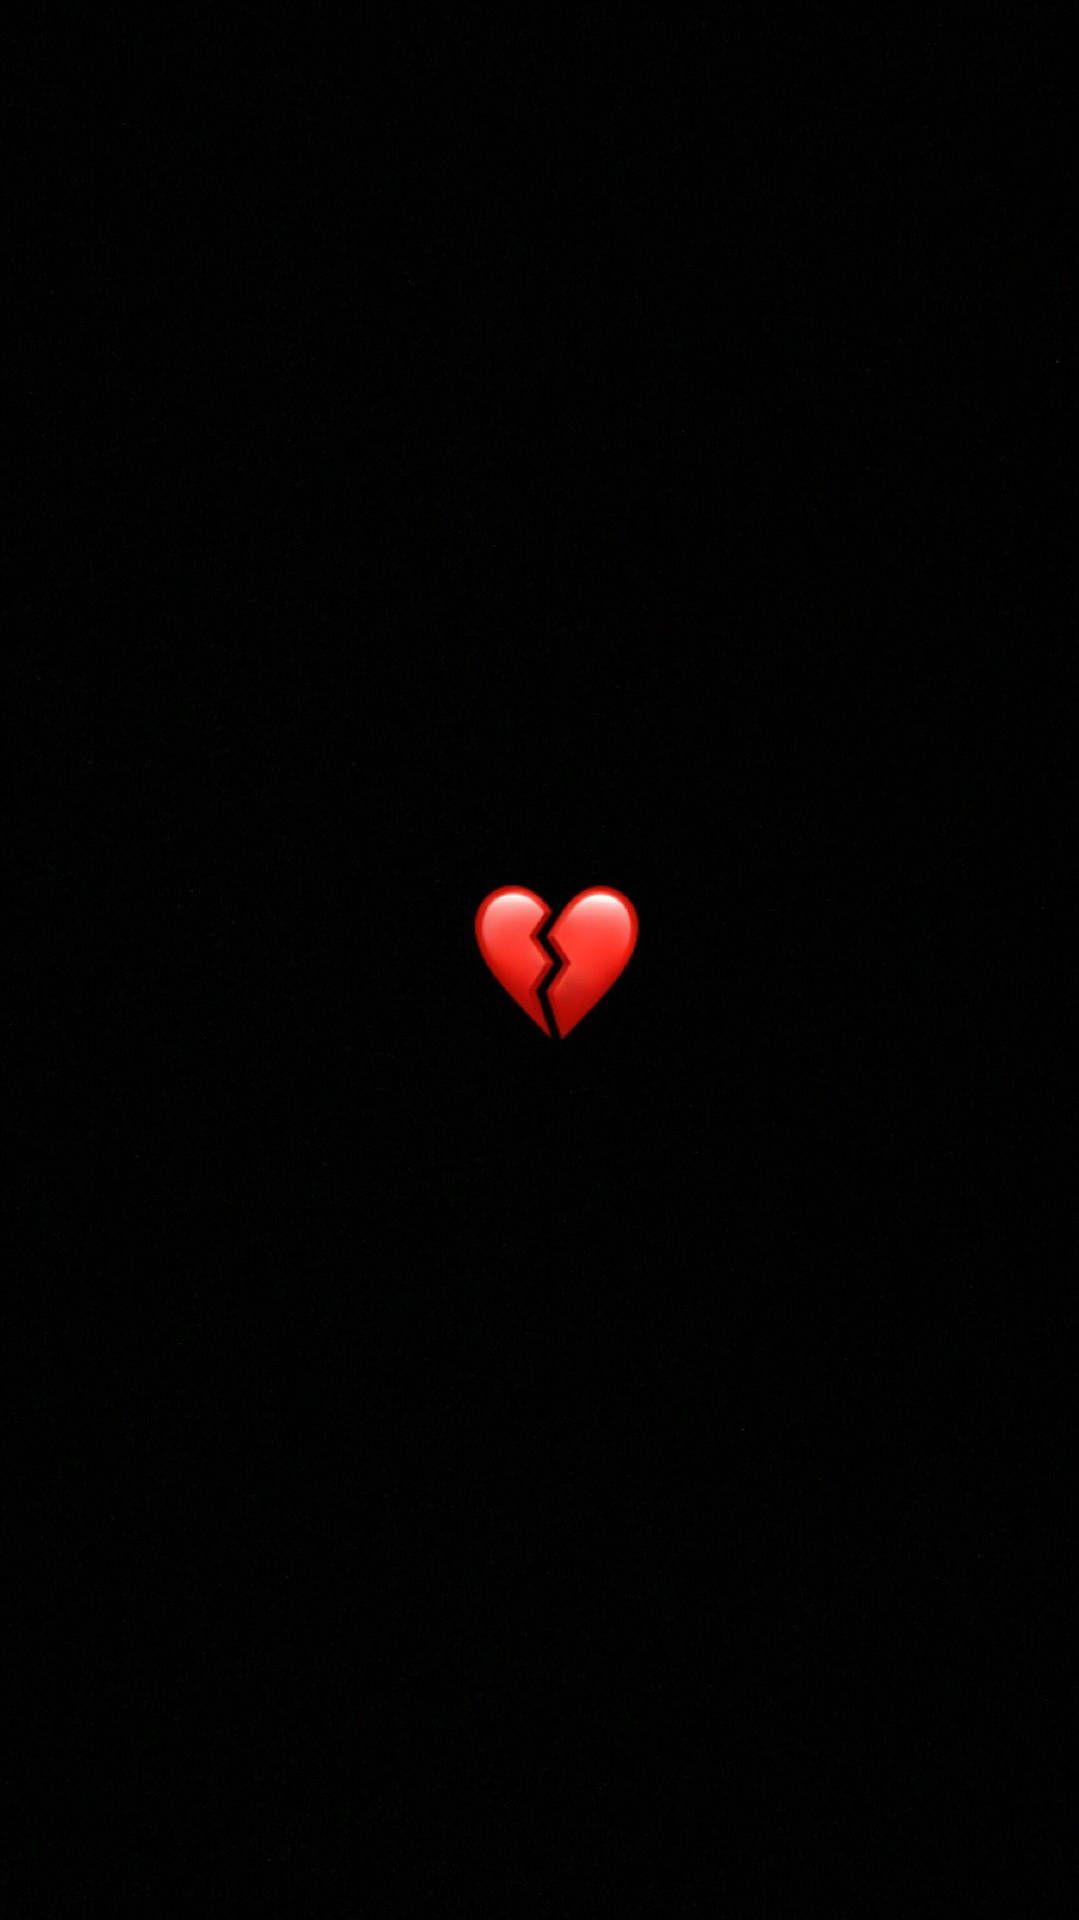 A broken heart emoji in red on a black background - Heart